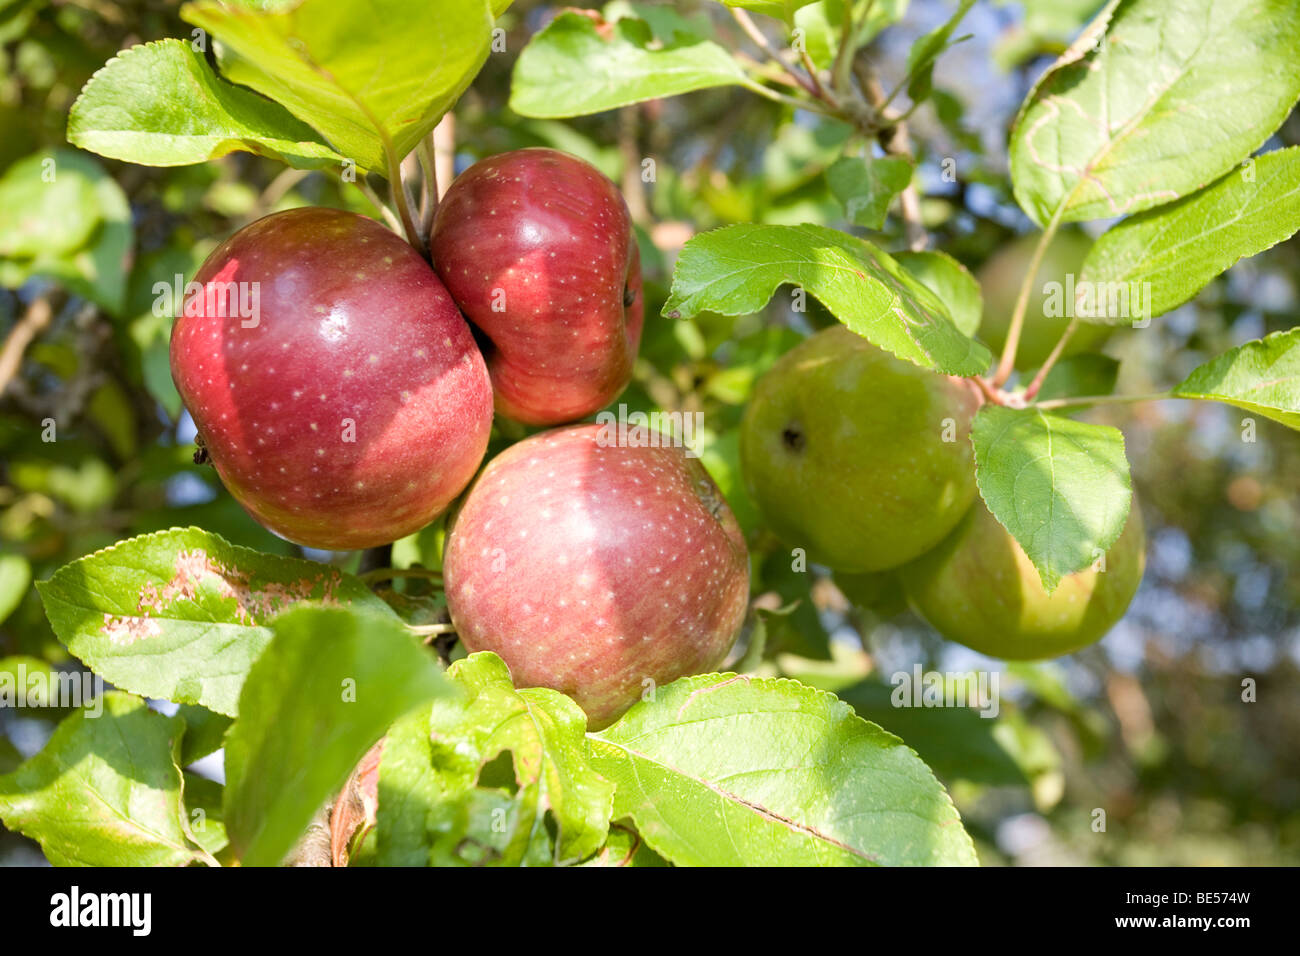 Apples (Malus domestica) from organic farming Stock Photo